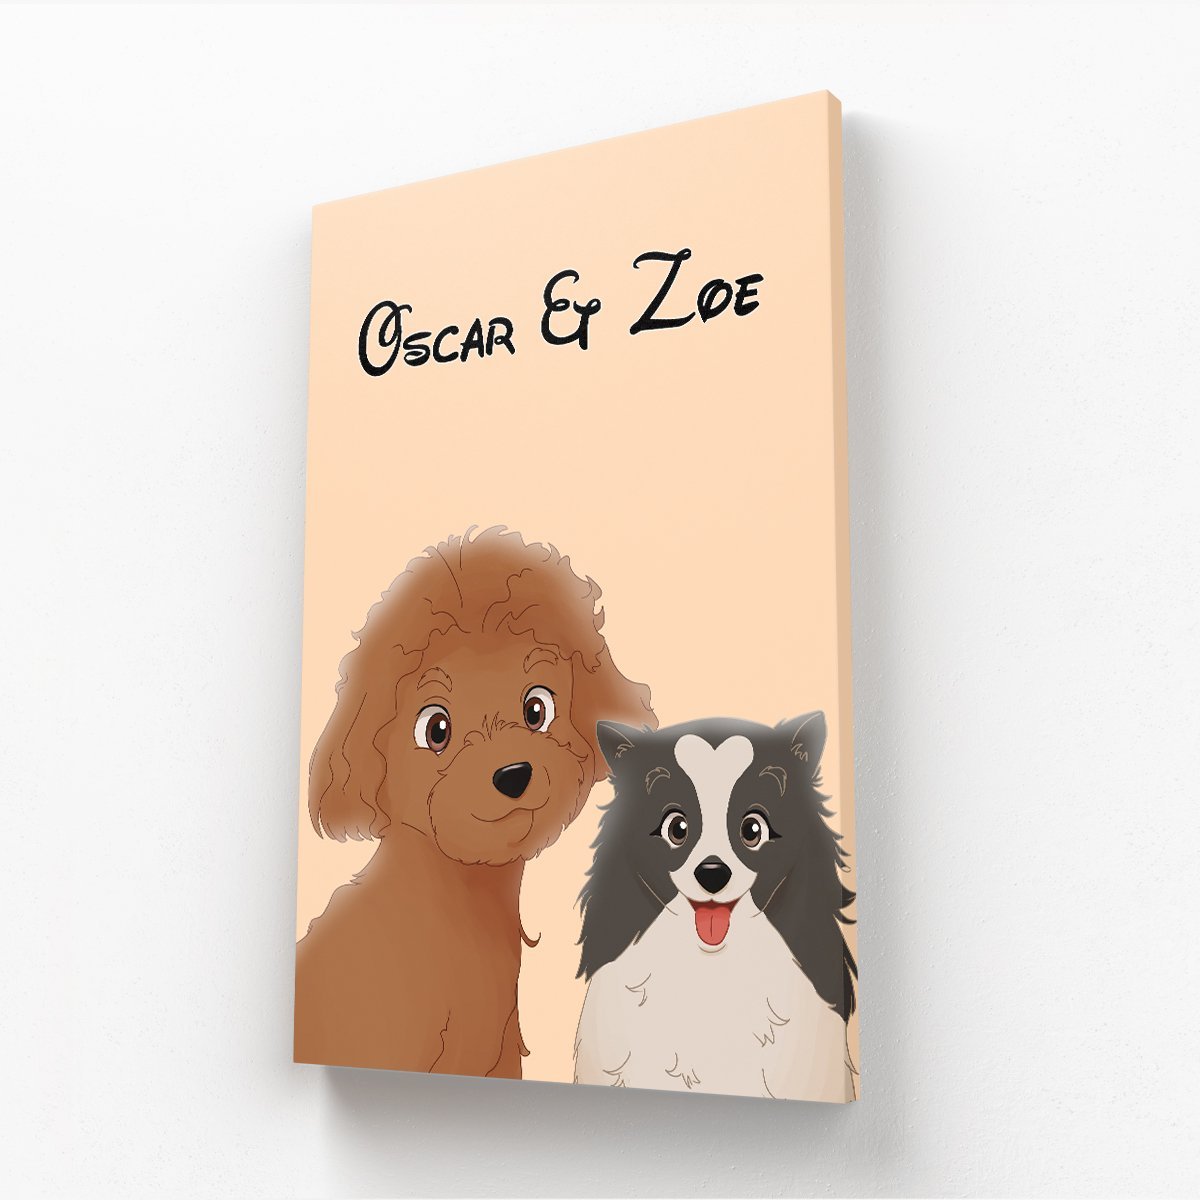 Cartoon: Custom 2 Pet Canvas - Paw & Glory - #pet portraits# - #dog portraits# - #pet portraits uk#paw & glory, pet portraits canvas,dog canvas painting, dog canvas wall art, personalised dog canvas, dog canvas bag, canvas of pet